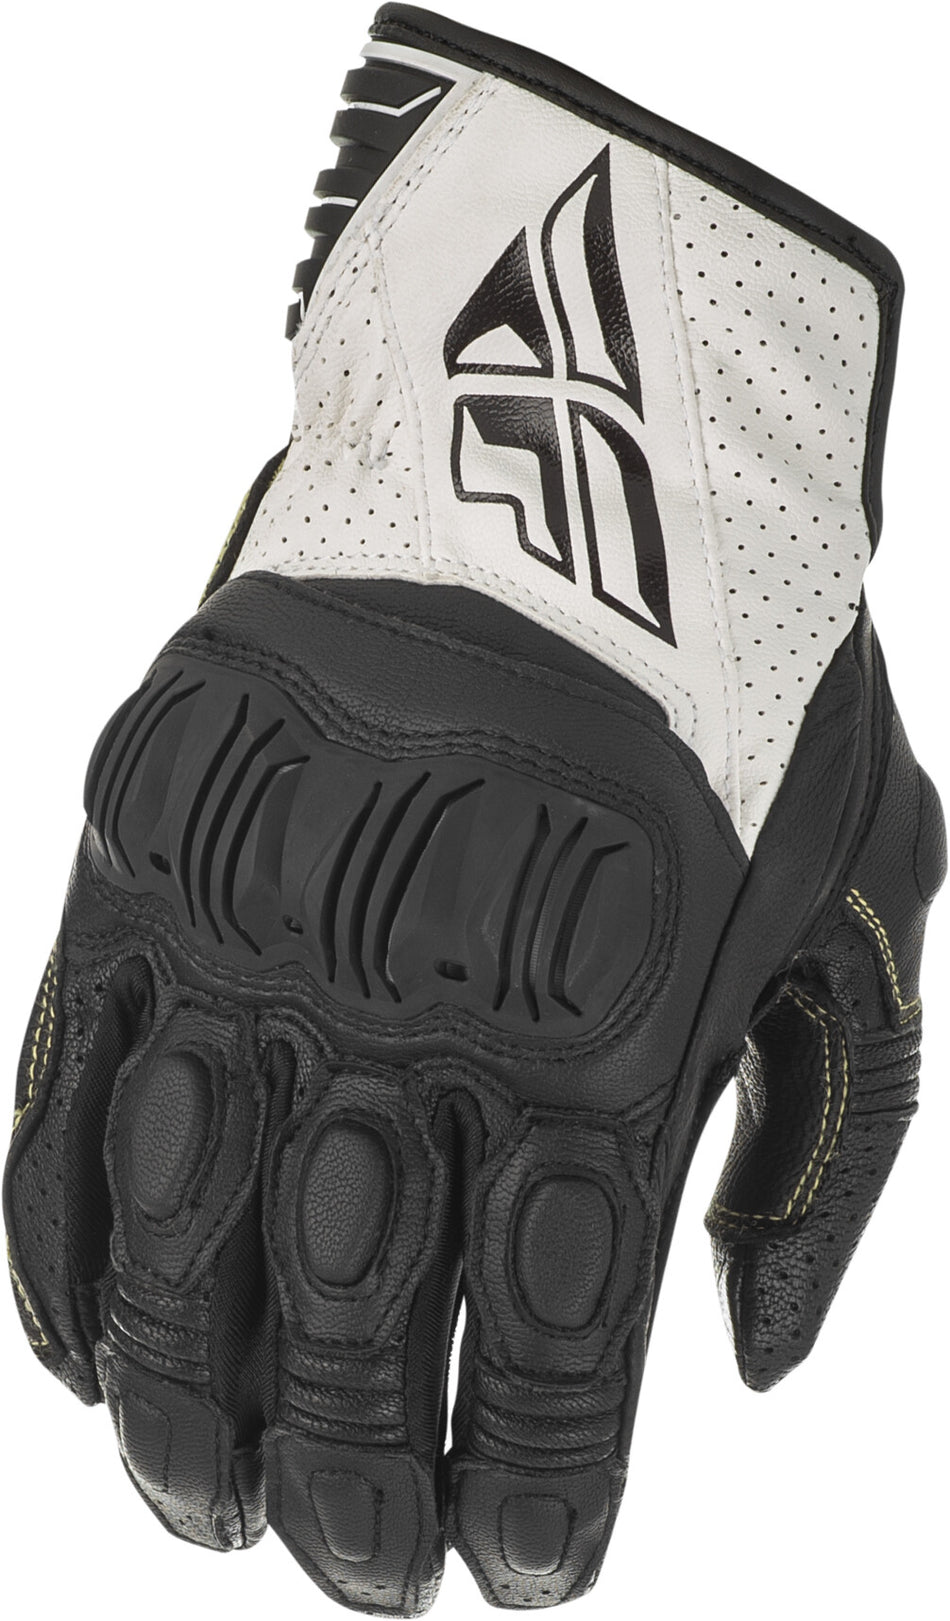 FLY RACING Brawler Gloves Black/White Sm 476-2093S